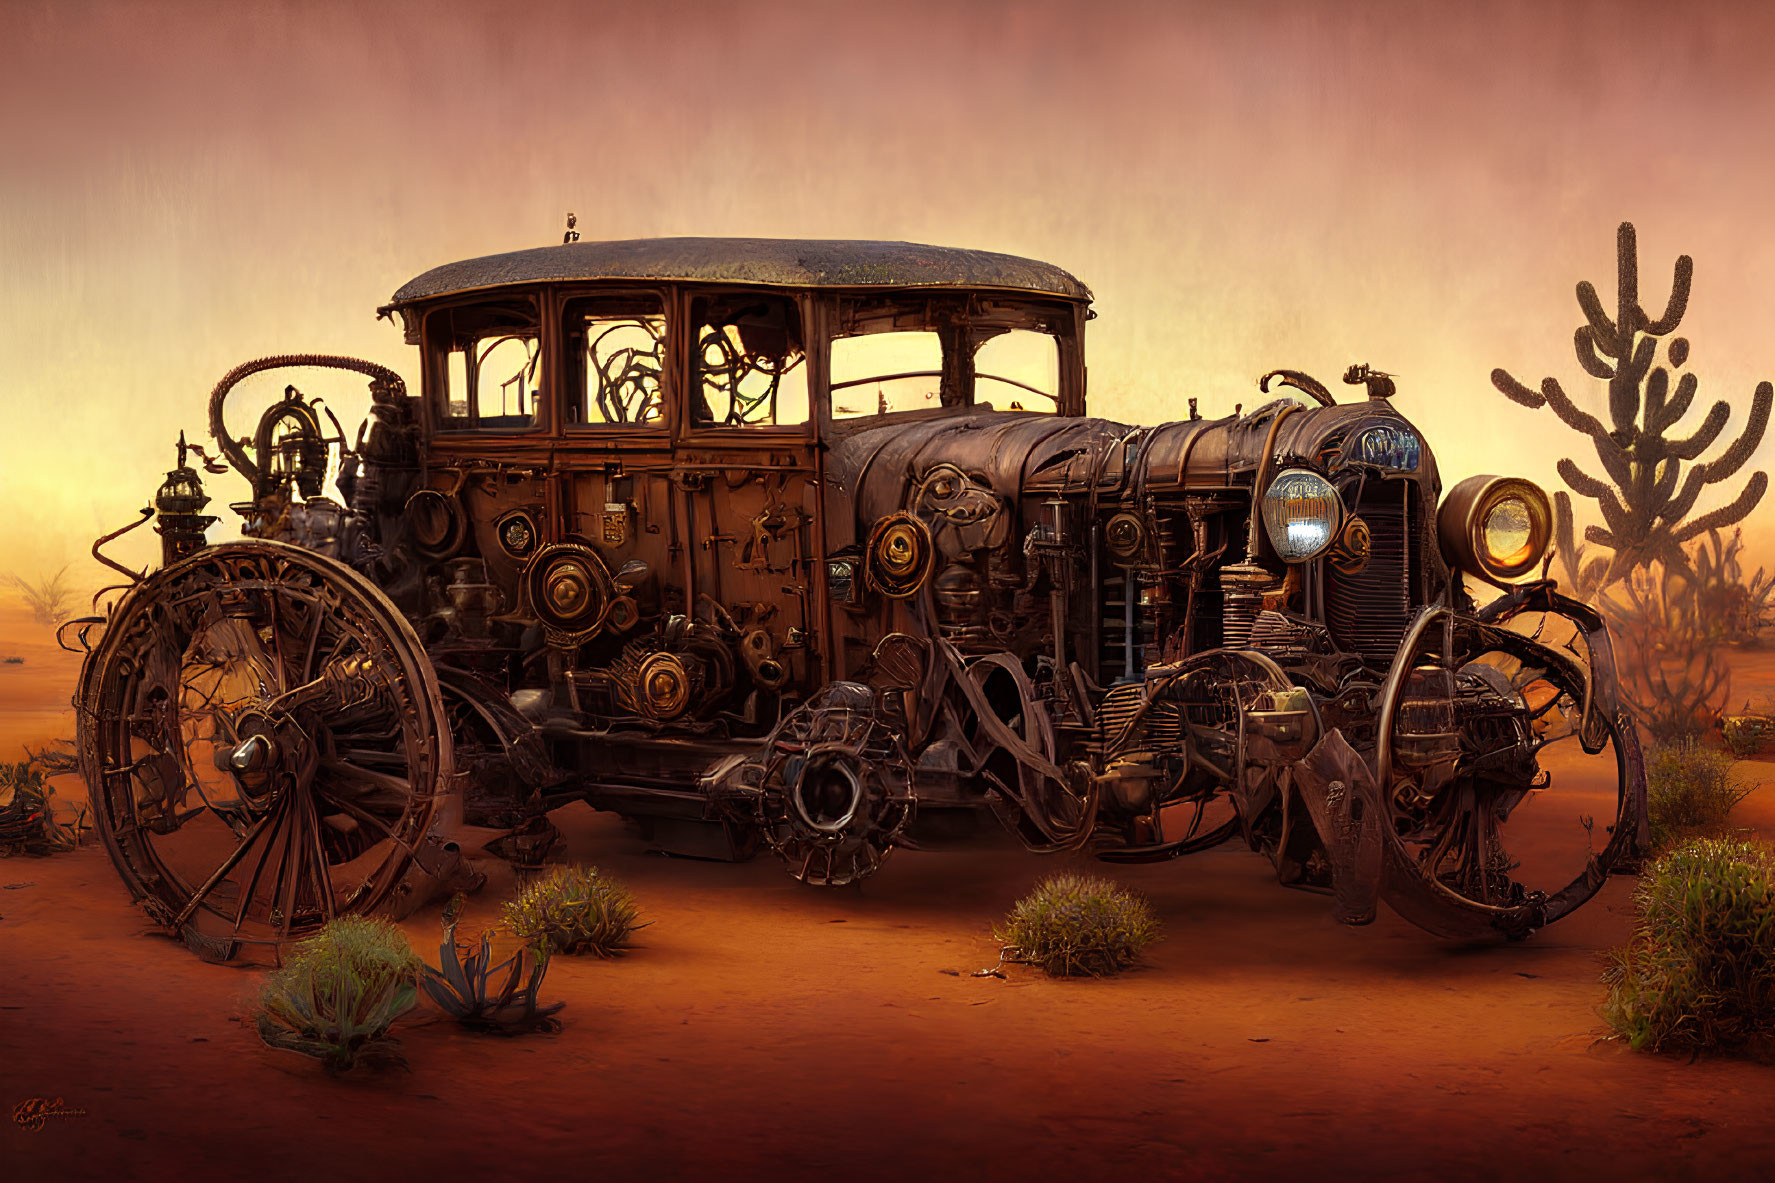 Intricately designed steampunk vehicle in desert landscape at dusk